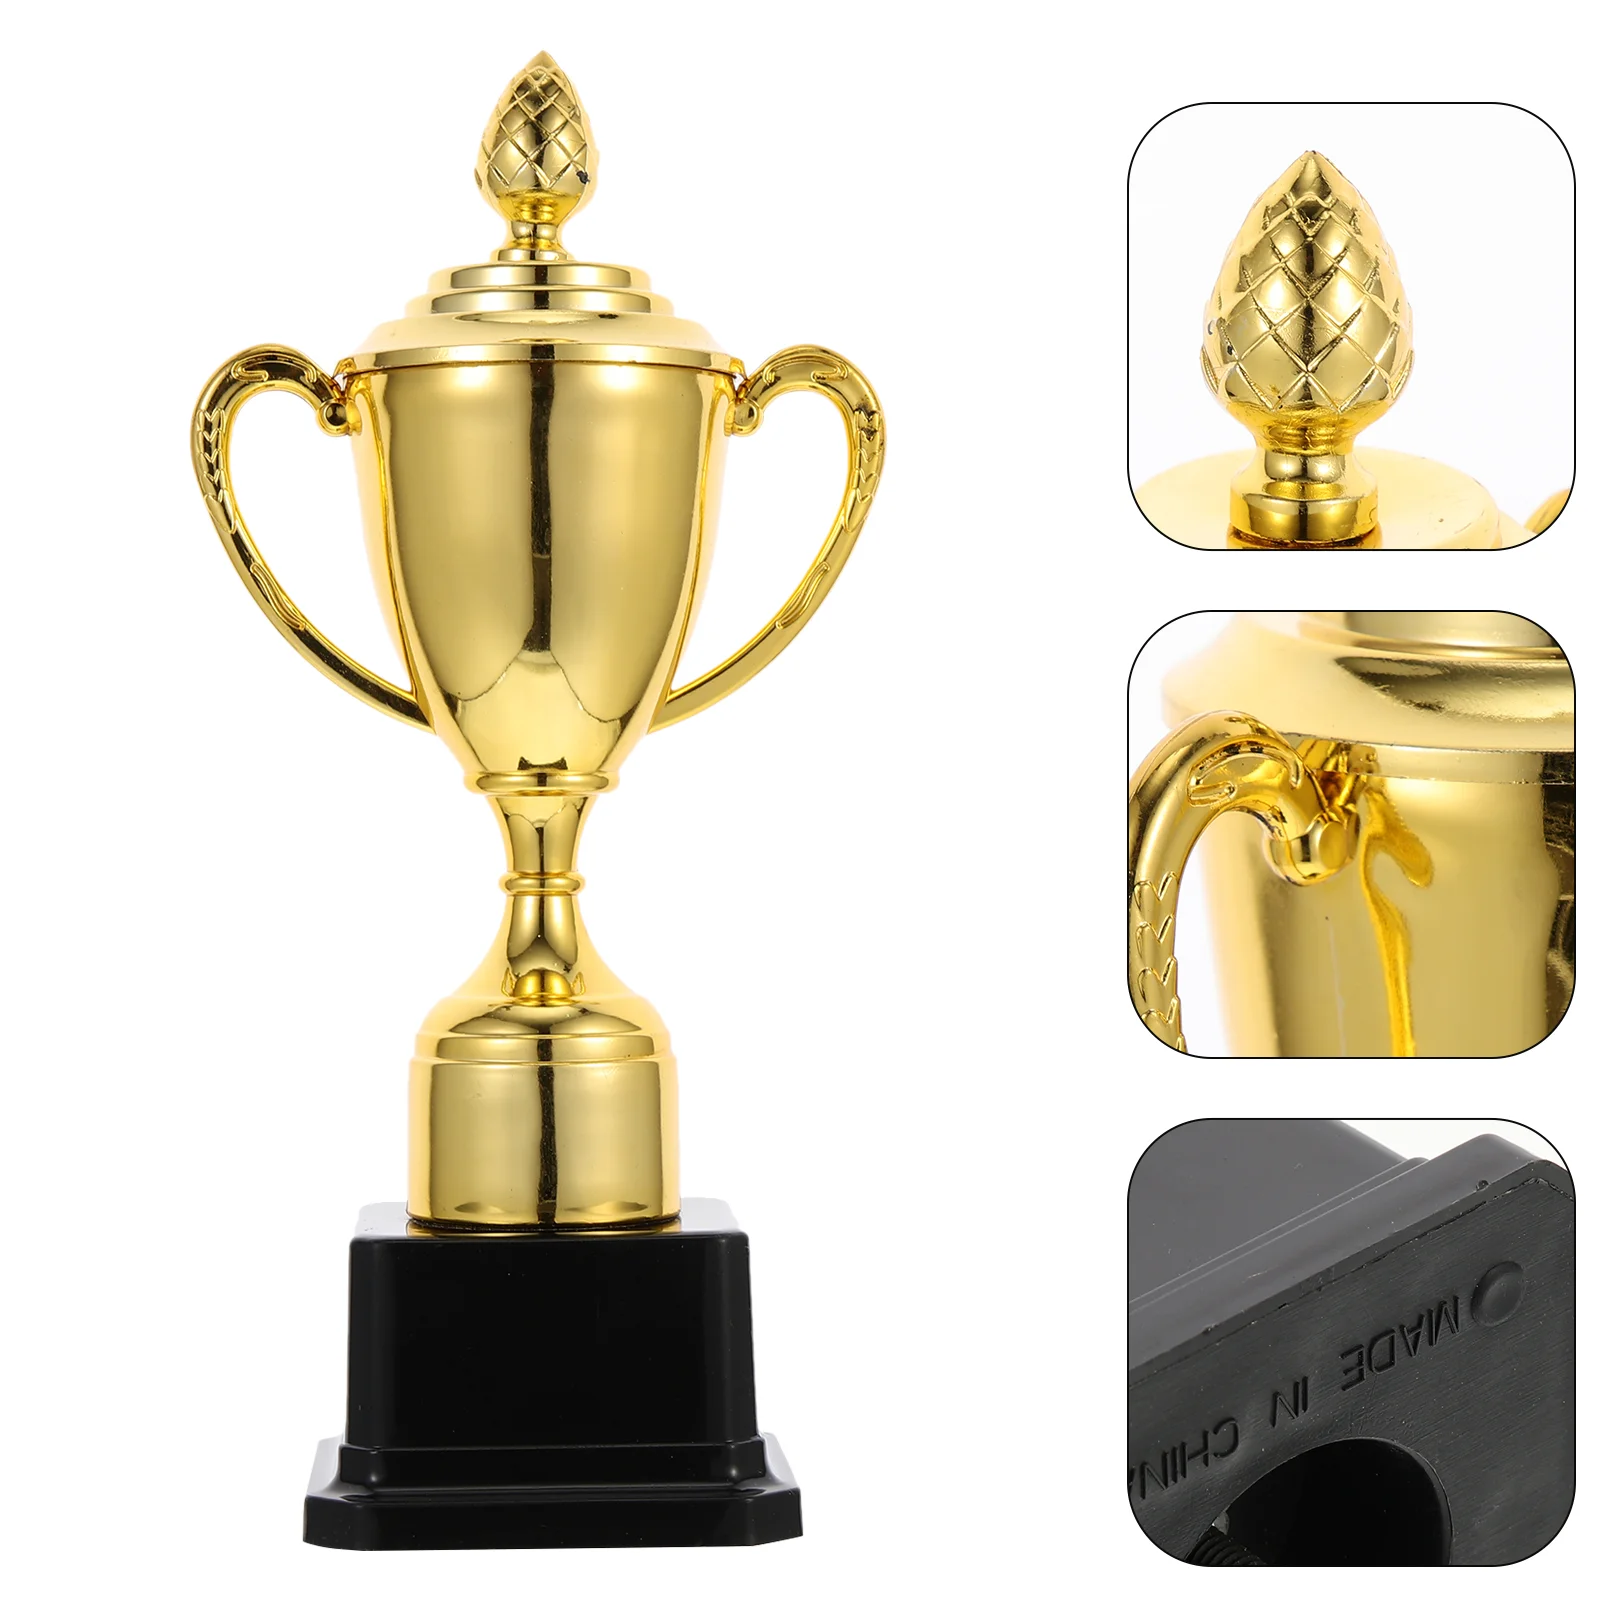 

Creative Trophy Kindergarten Children Company Trophy Decor Trophy Cup Multi-Function Mini Trophies Trophy Prize Trophy Game